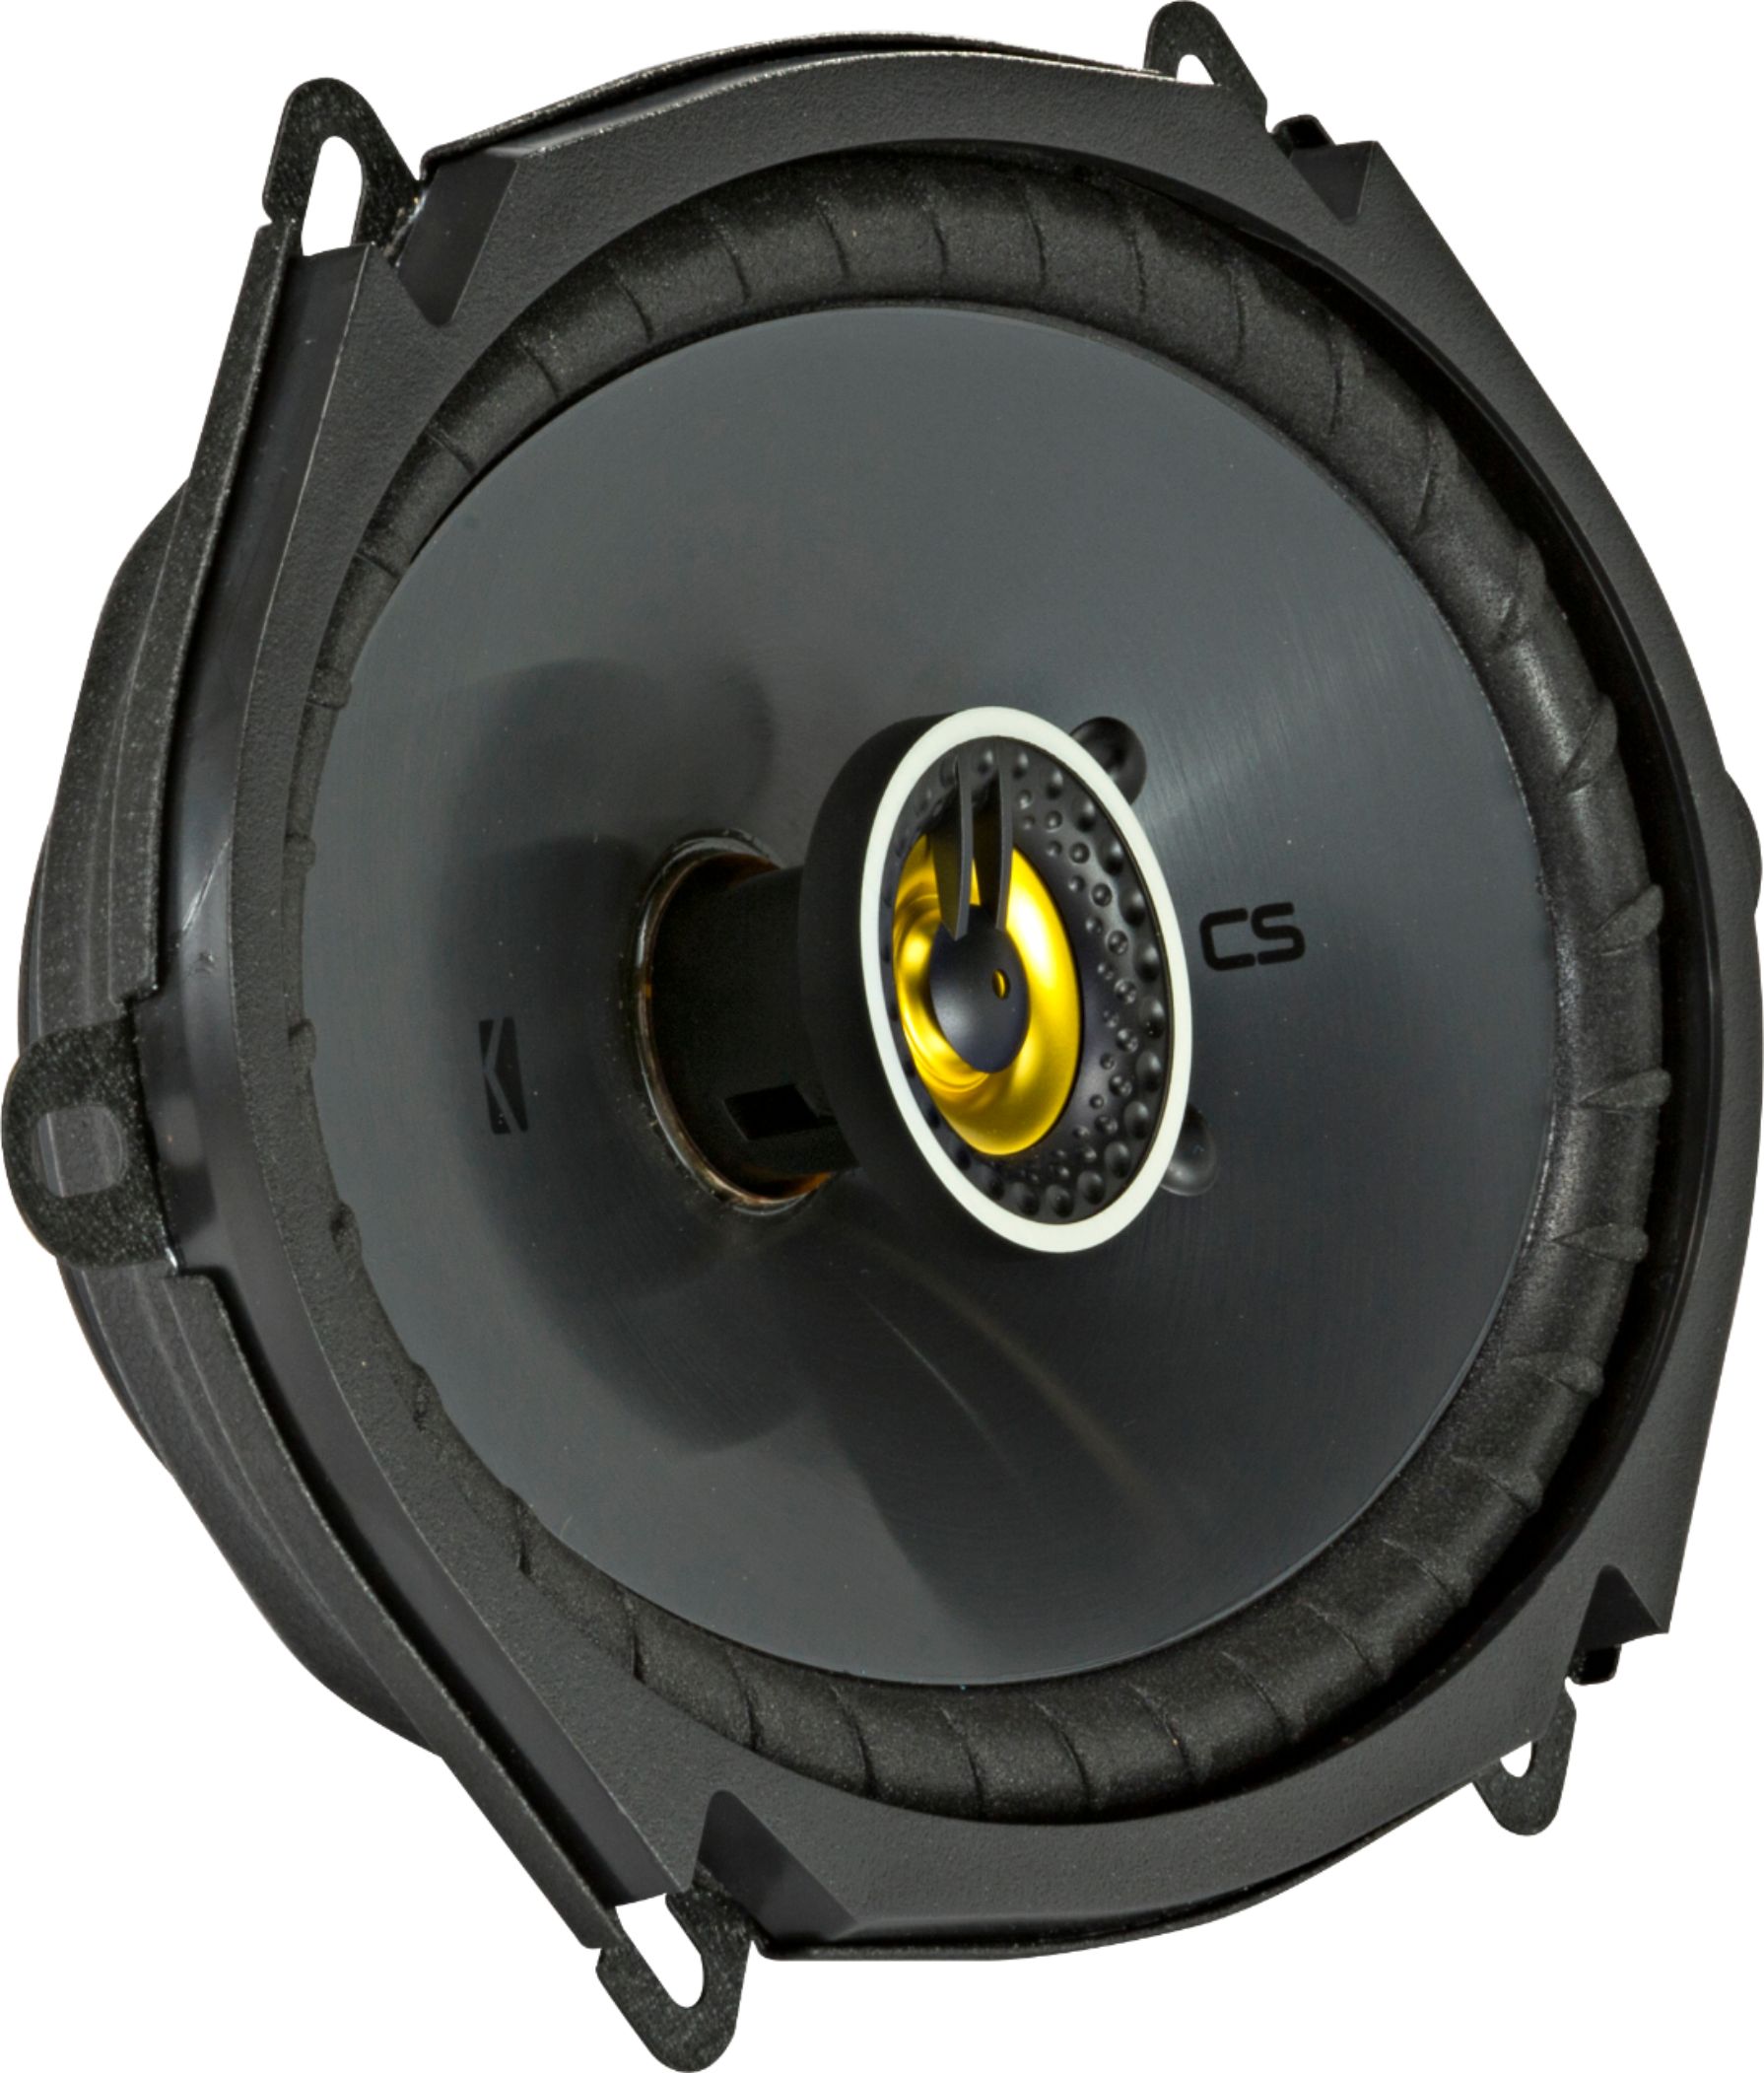 Angle View: KICKER - CS Series 6" x 8" 2-Way Car Speakers with Polypropylene Cones (Pair) - Black